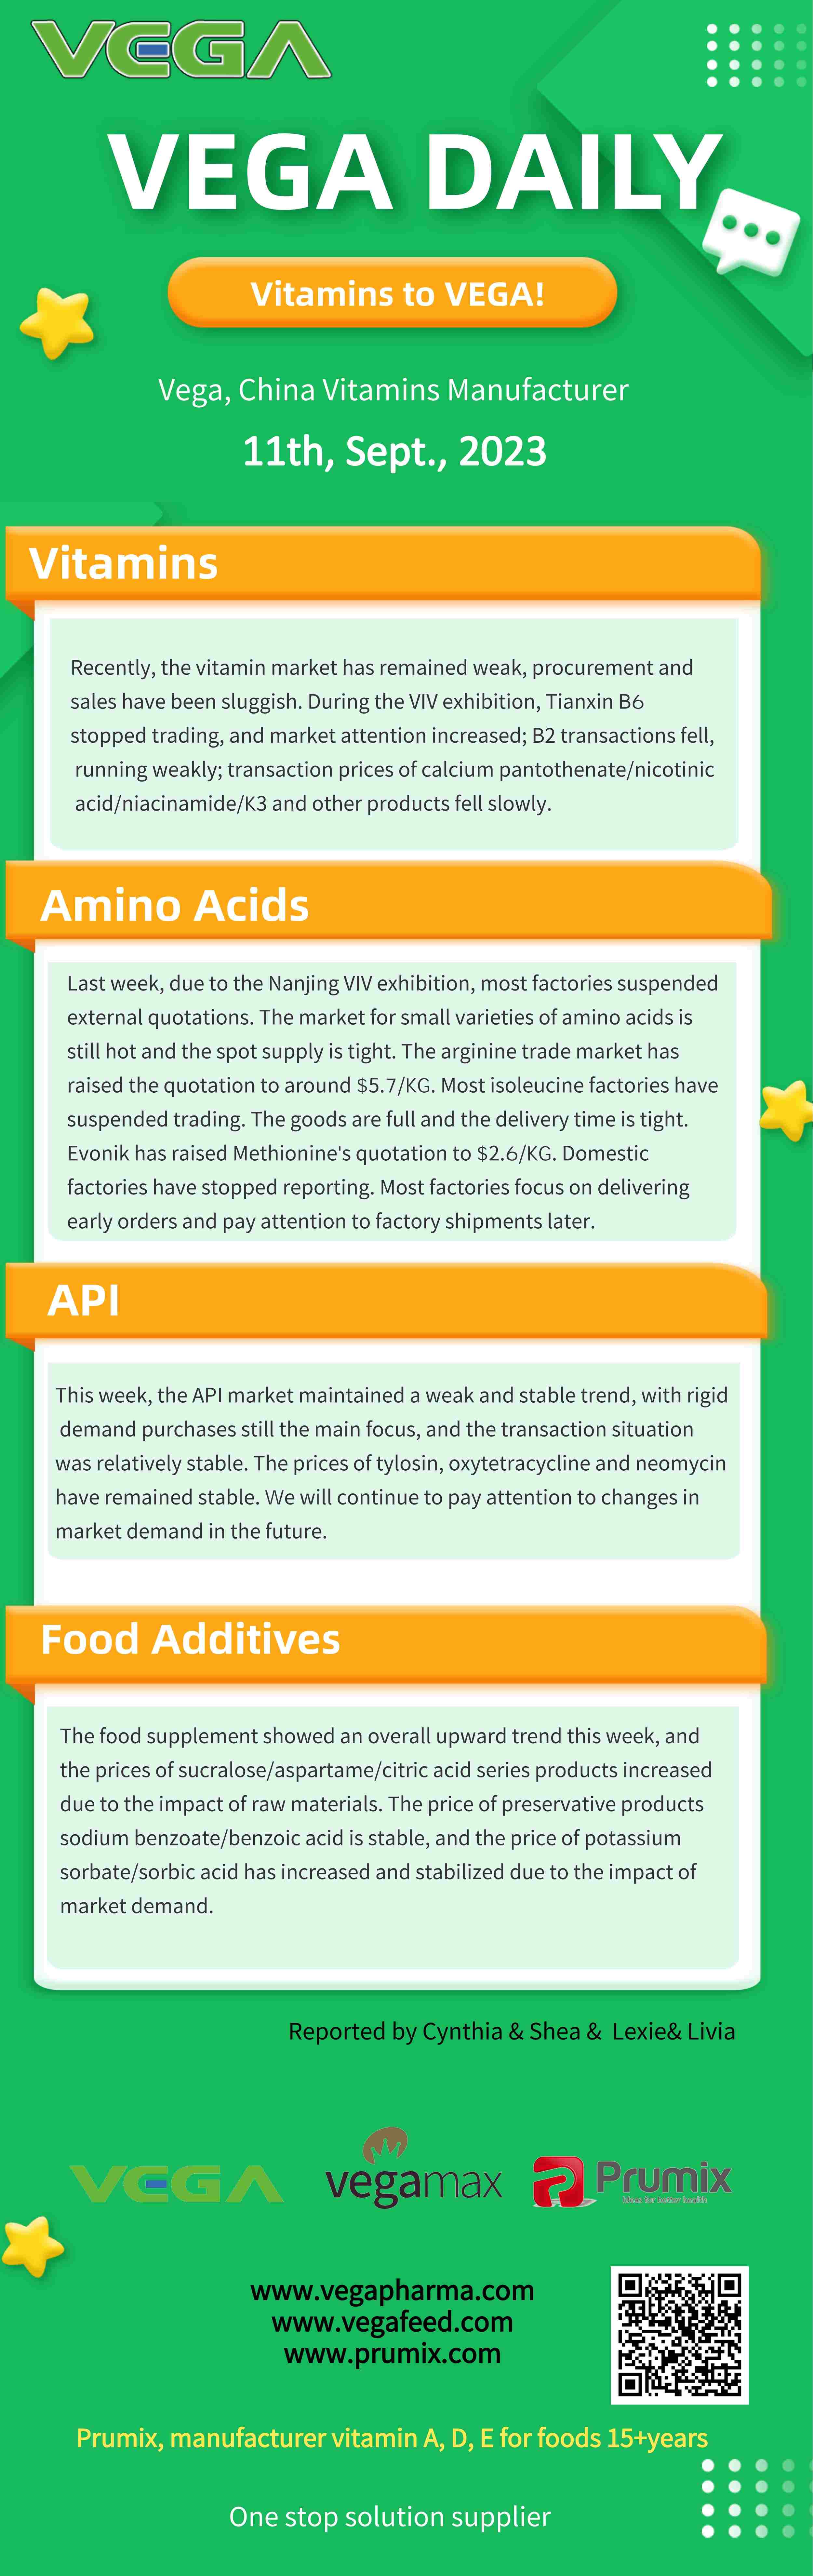 Vega Daily Dated on Sept 11th 2023 Vitamin  Amino Acid API Food Additive.jpg